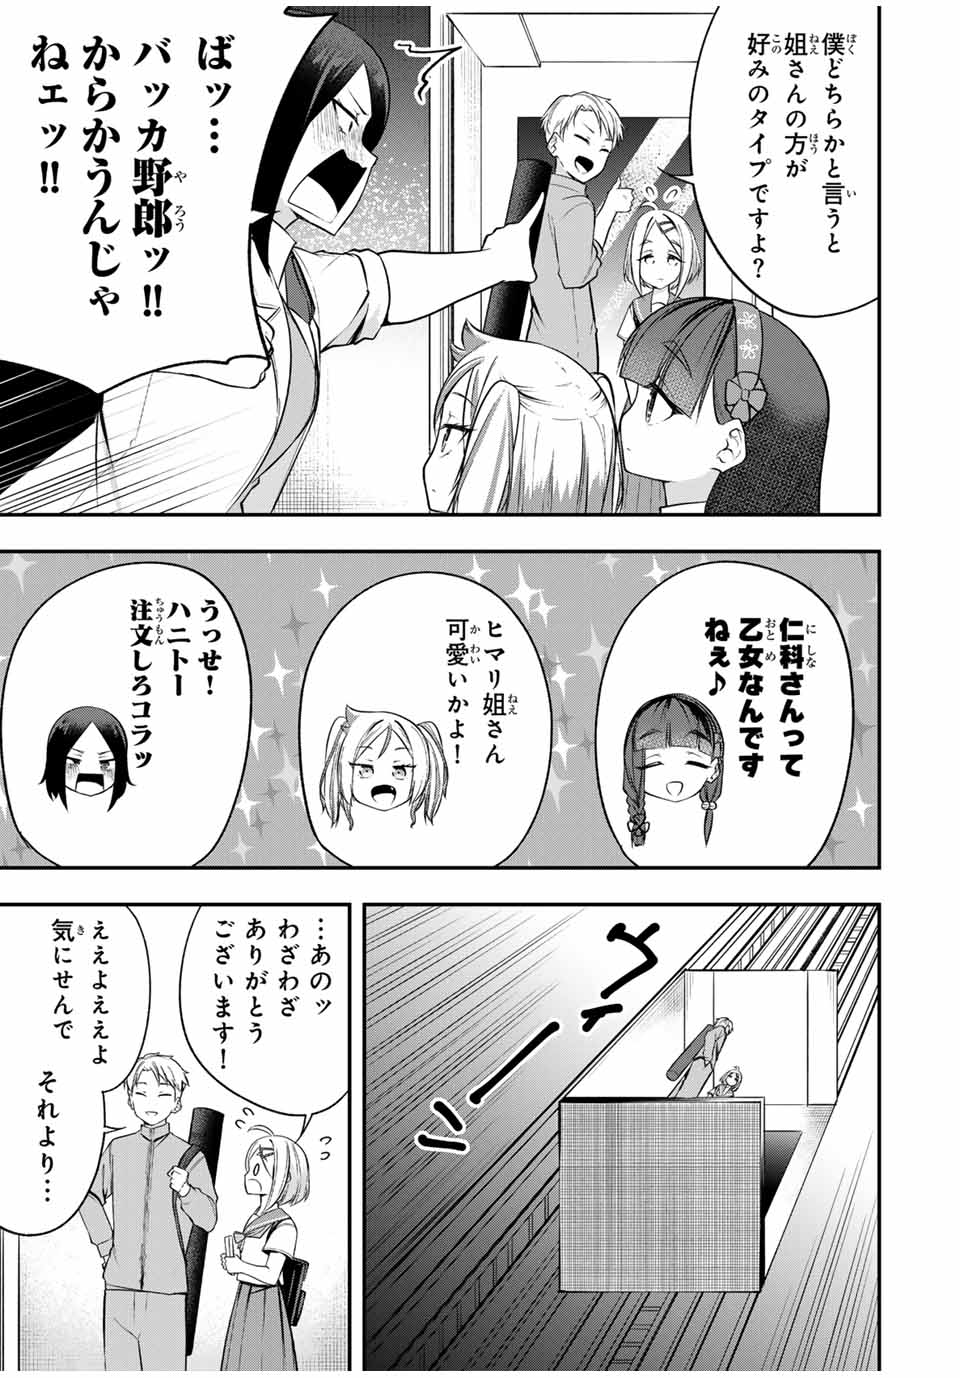 Heroine wa xx Okasegitai - Chapter 12 - Page 17